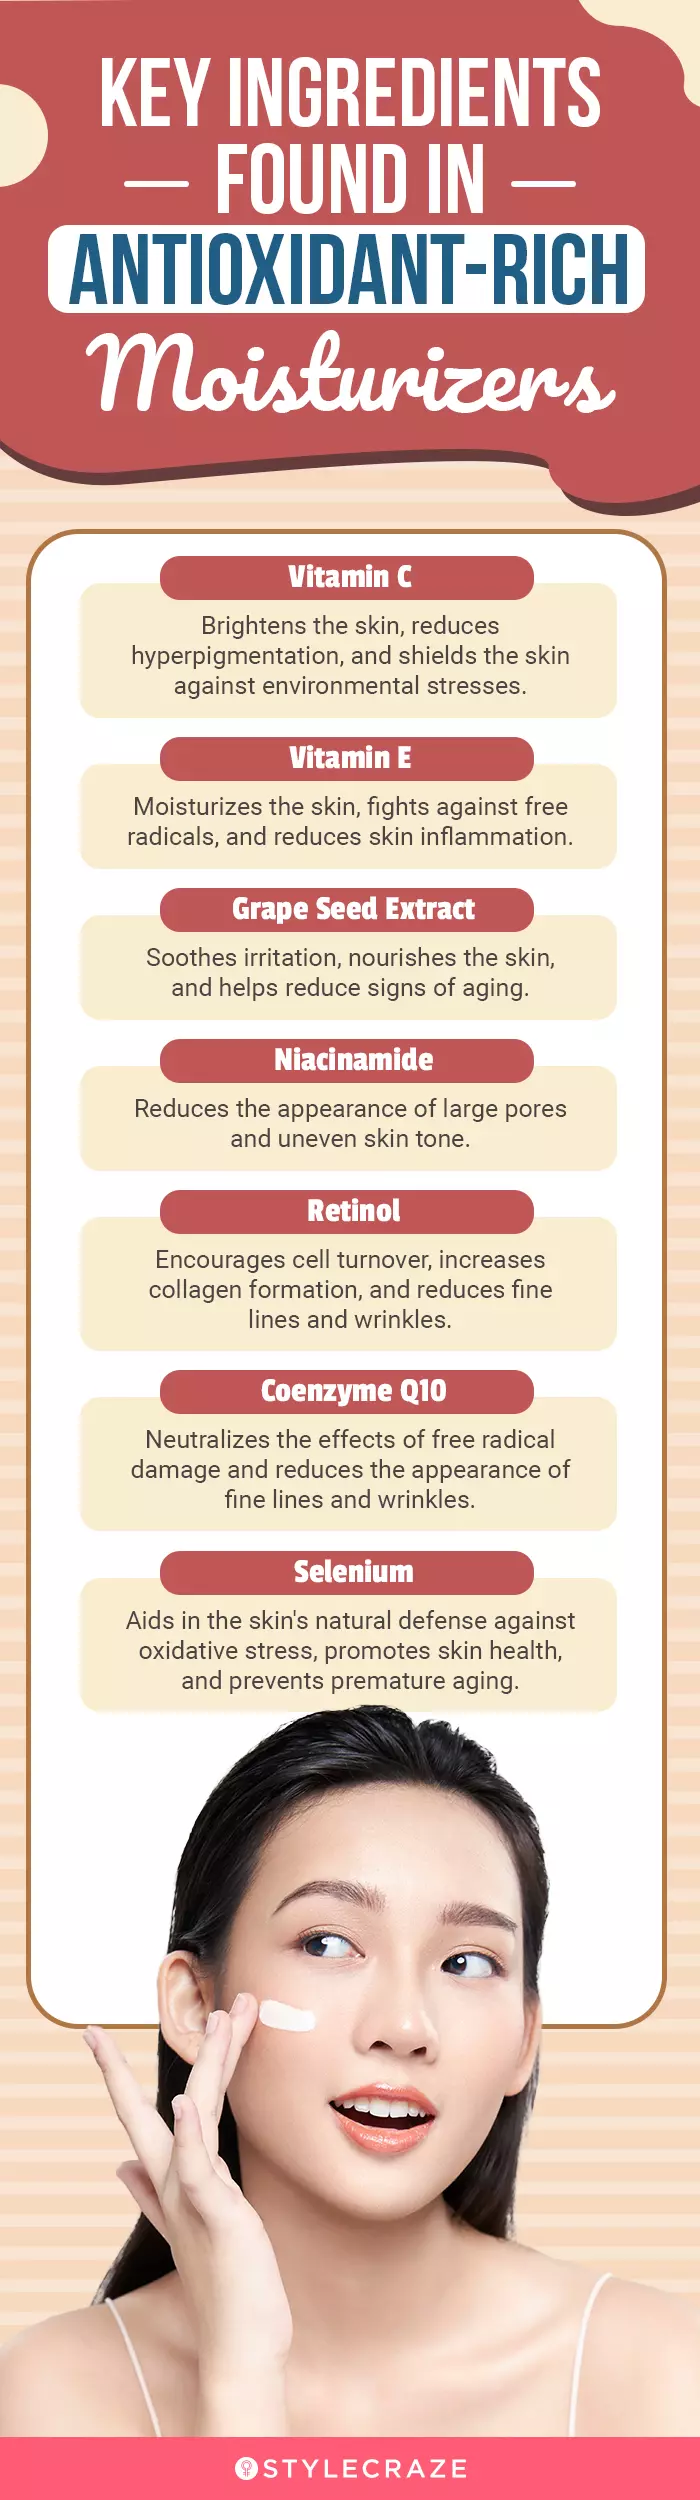 Key Ingredients Found In Antioxidant-Rich Moisturizers(infographic)